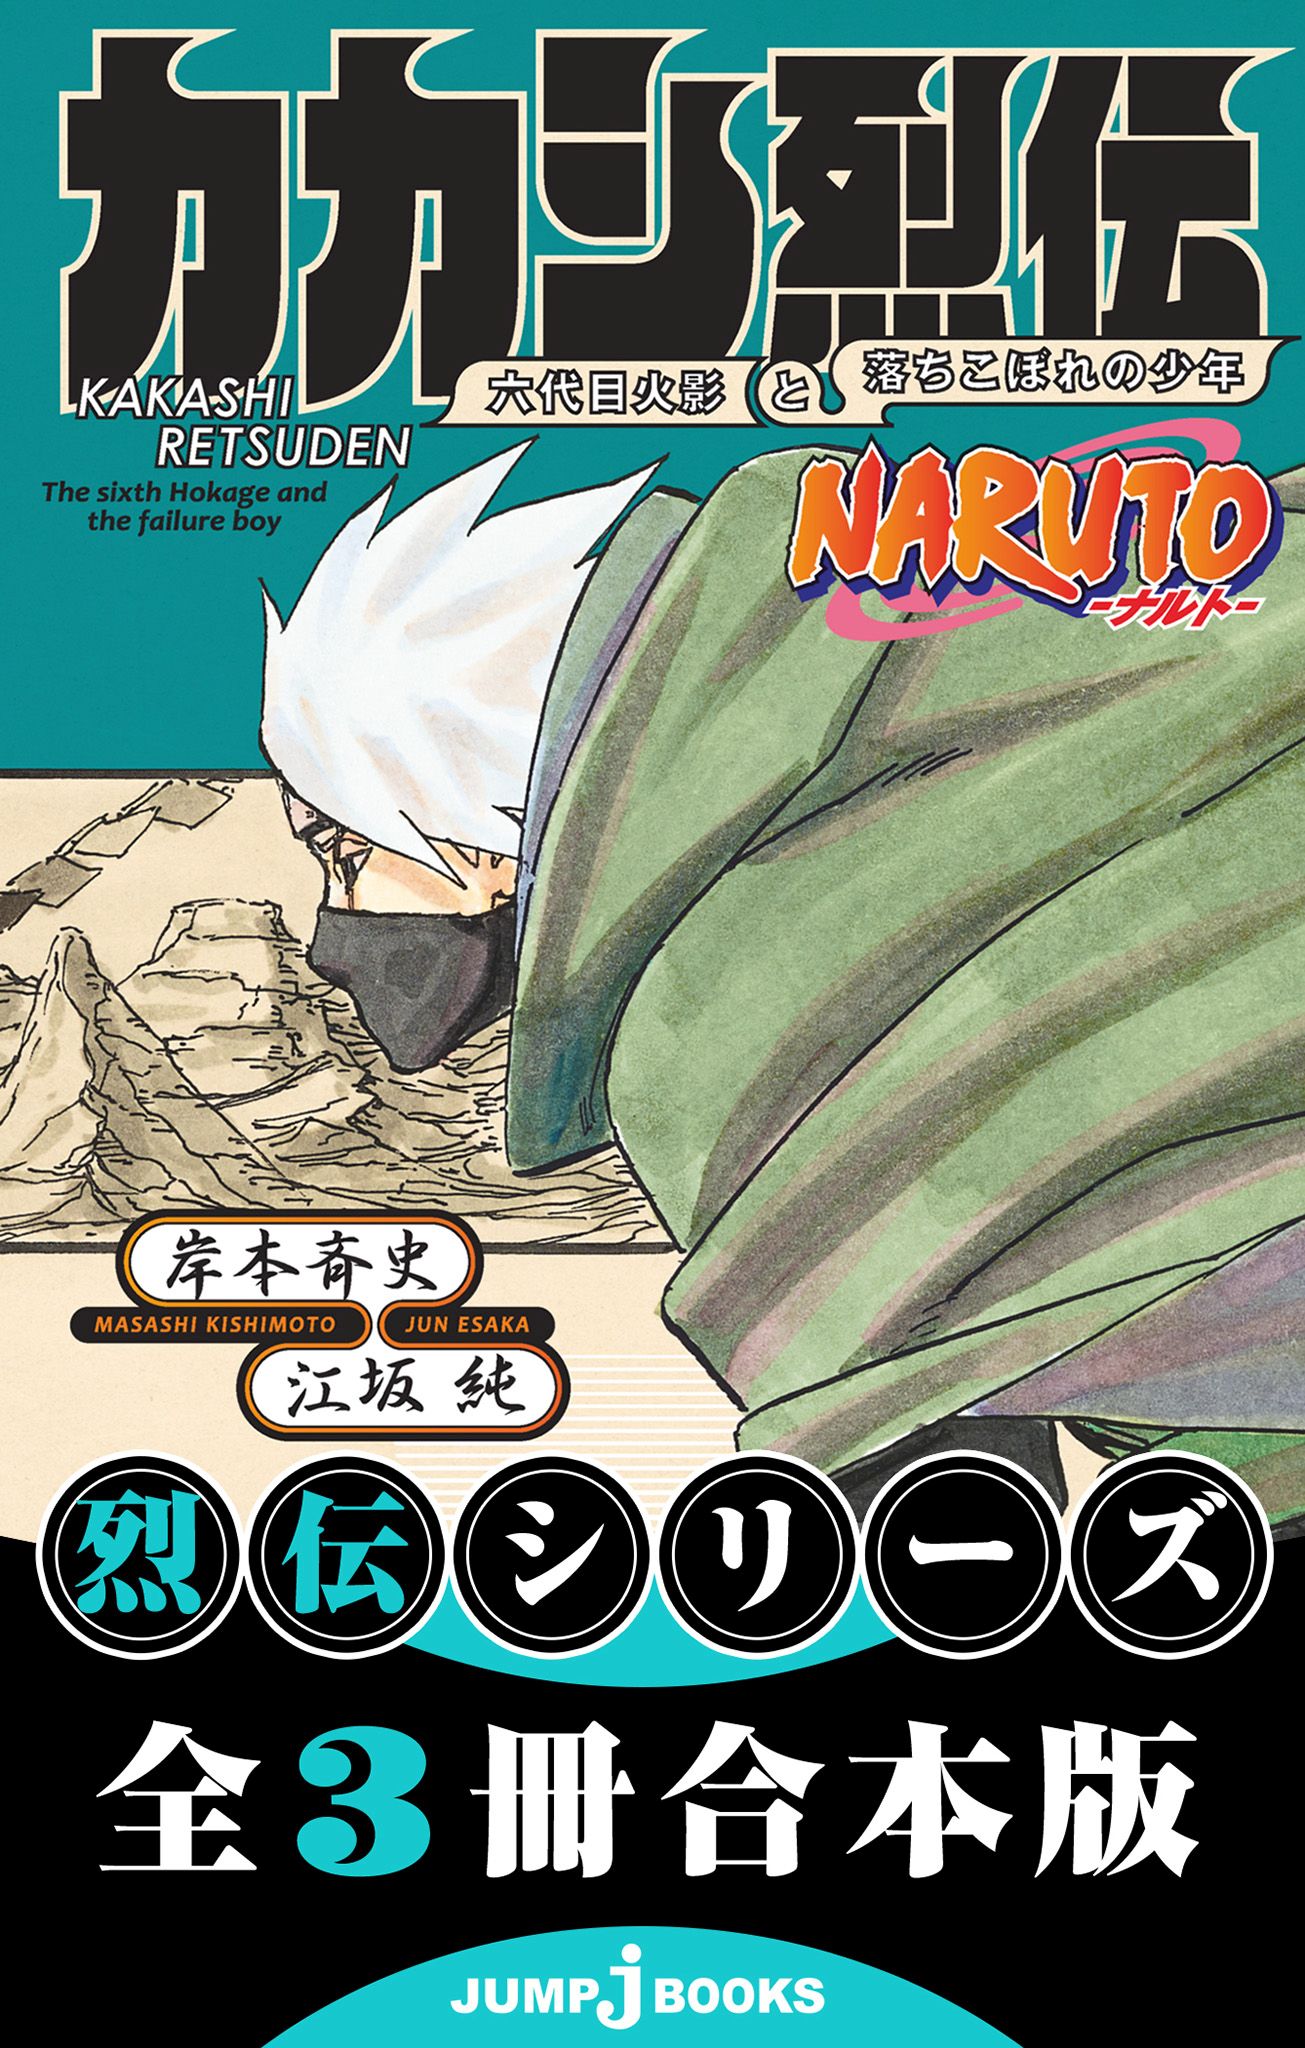 NARUTO―ナルト― 烈伝 合本版(ラノベ) - 電子書籍 | U-NEXT 初回600円分無料